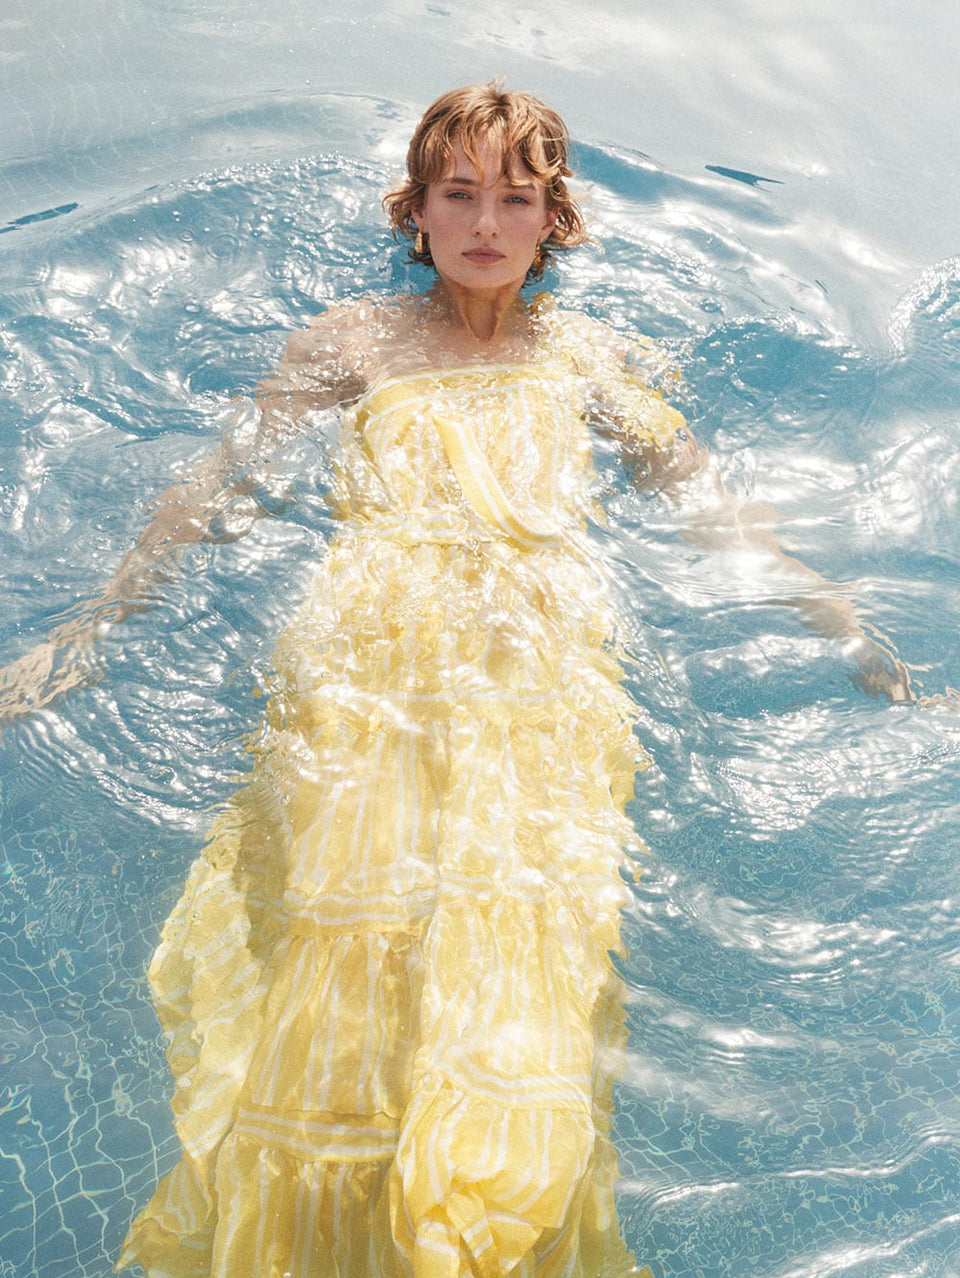 Lola Maxi Dress KIVARI | Model wears yellow and white striped maxi dress in water campaign image